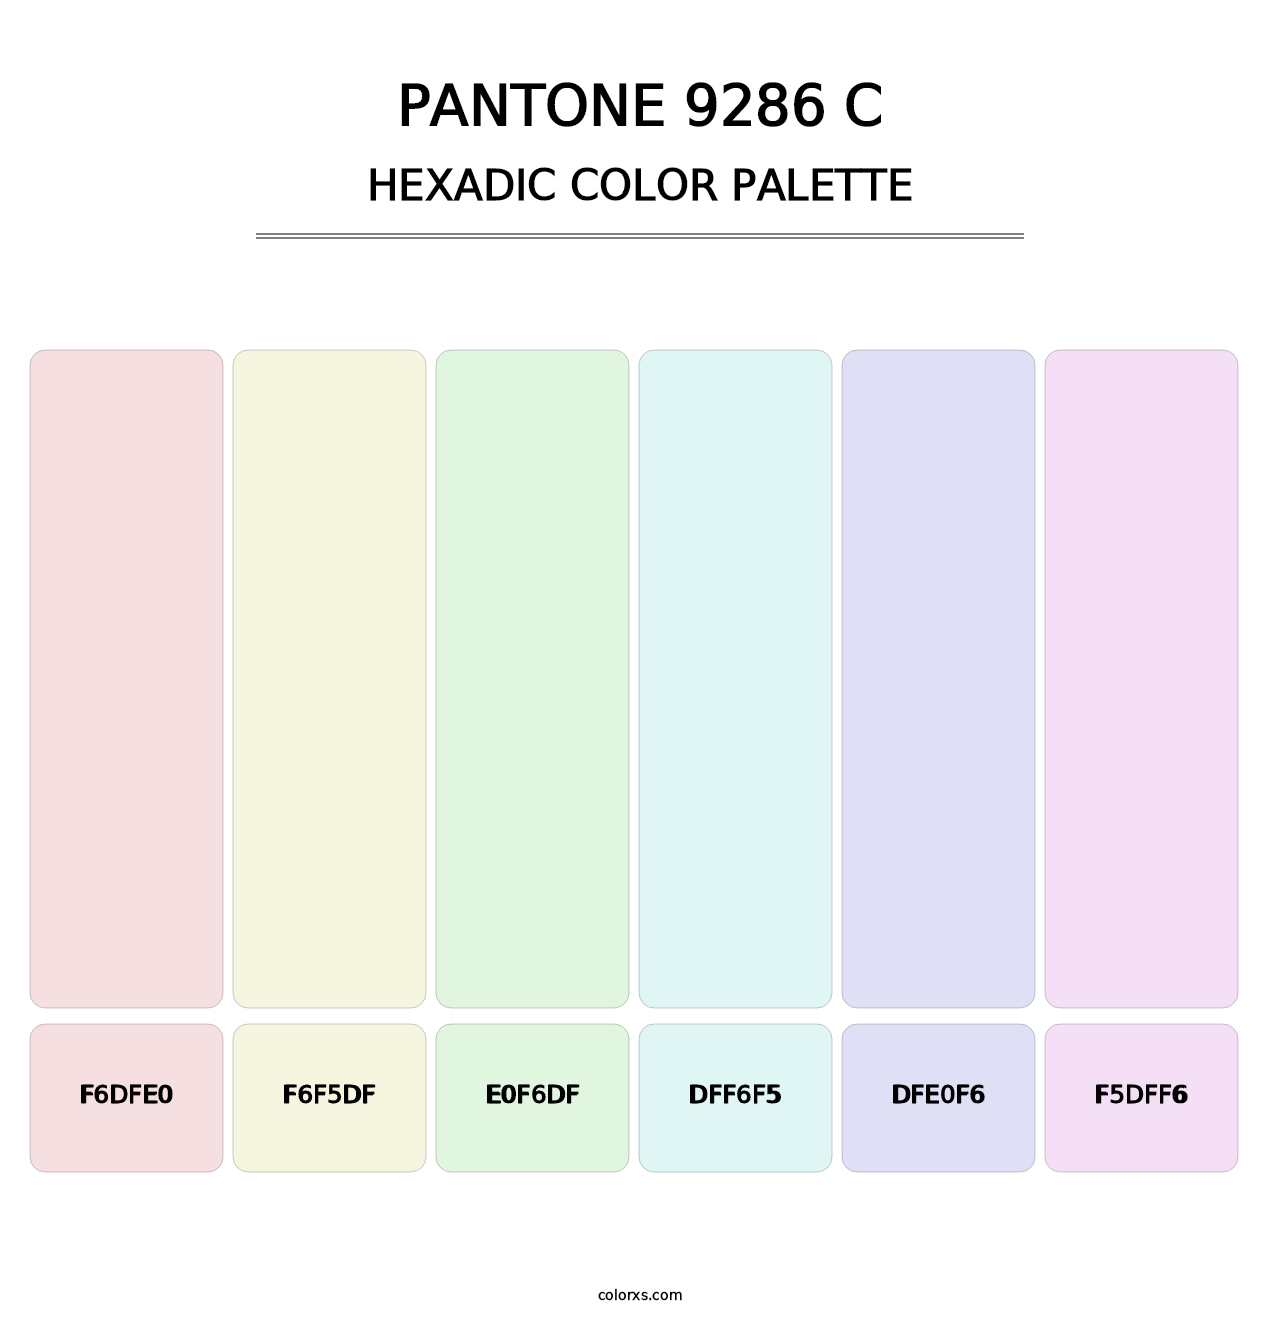 PANTONE 9286 C - Hexadic Color Palette